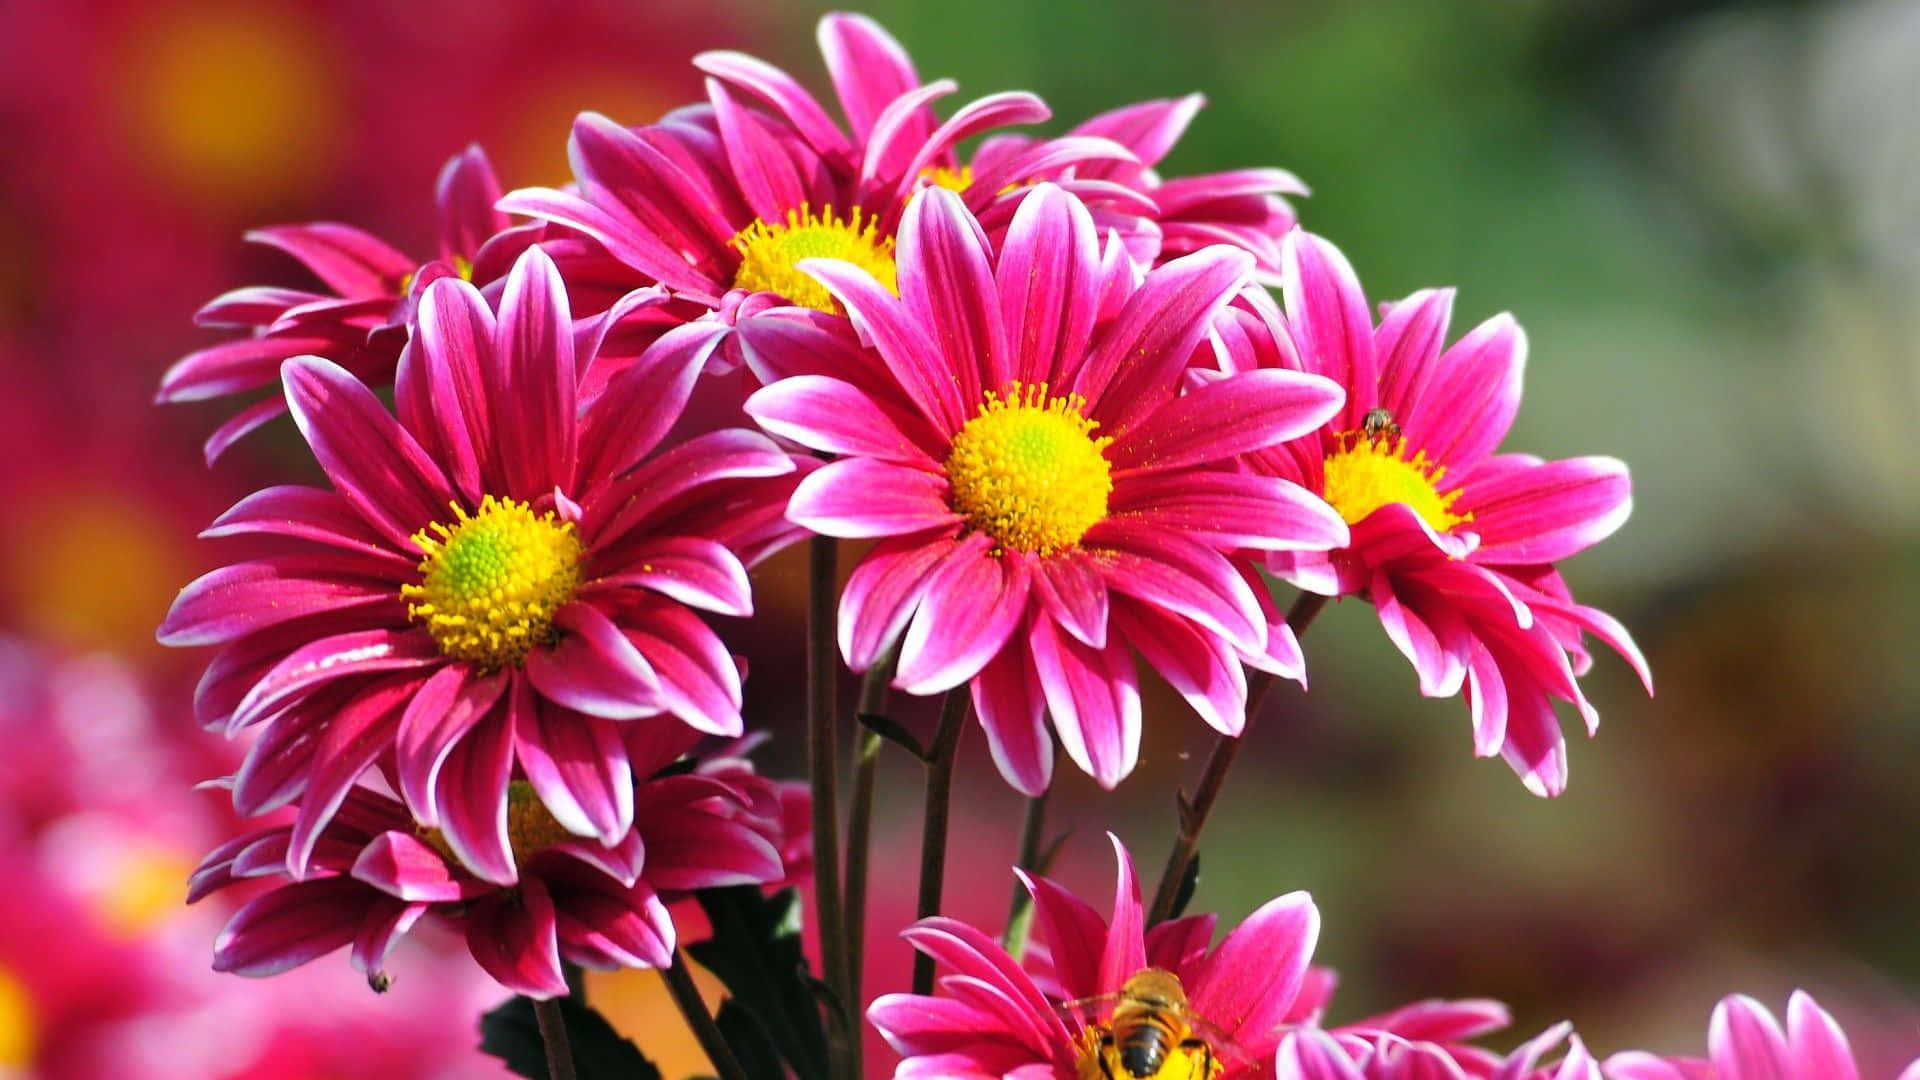 Enjoy the beauty of a radiant, vibrant flower